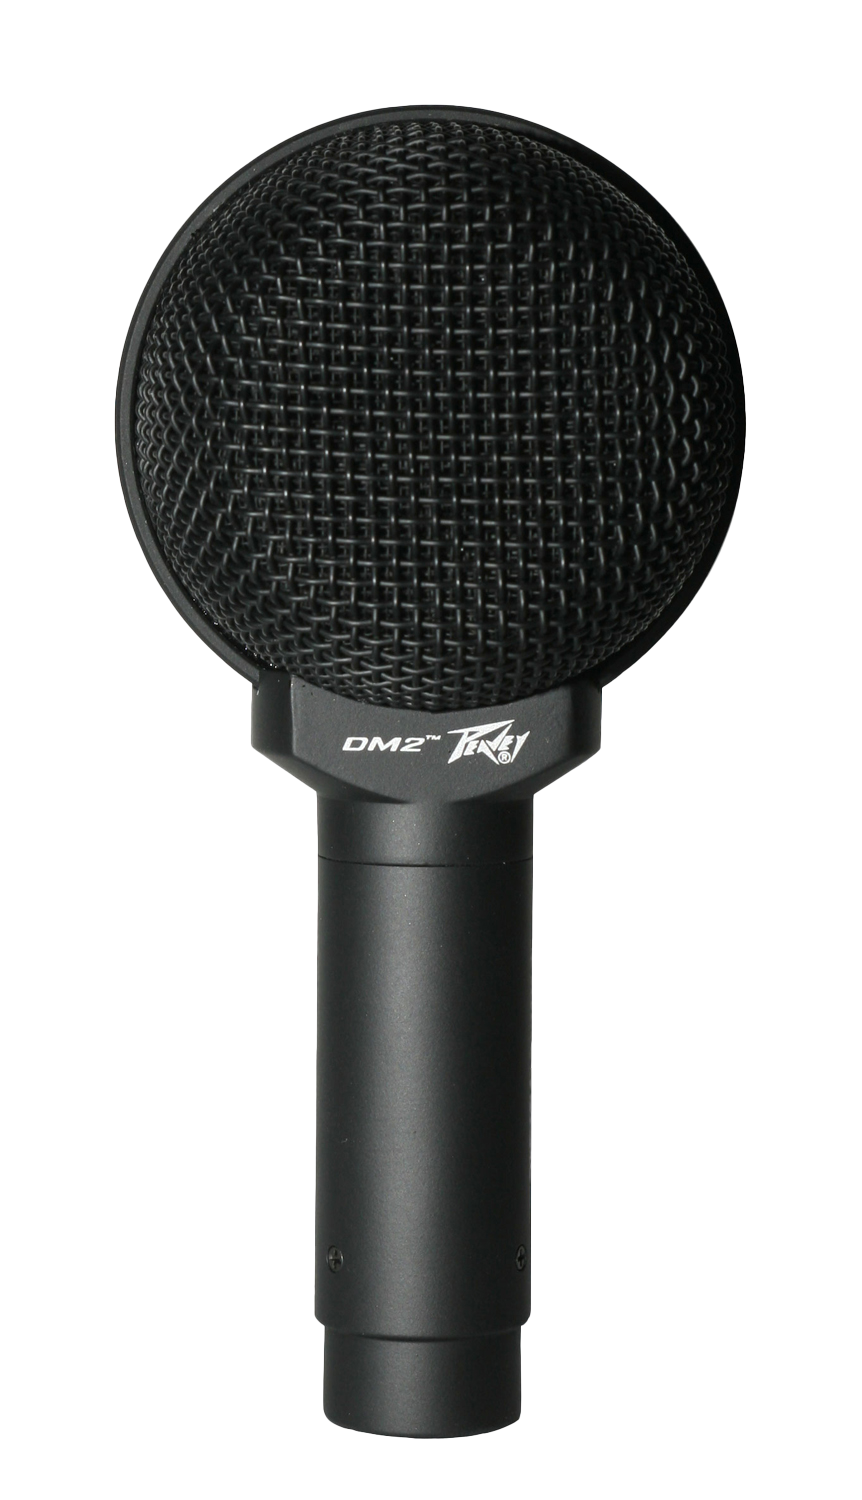 DM2™ Microphone